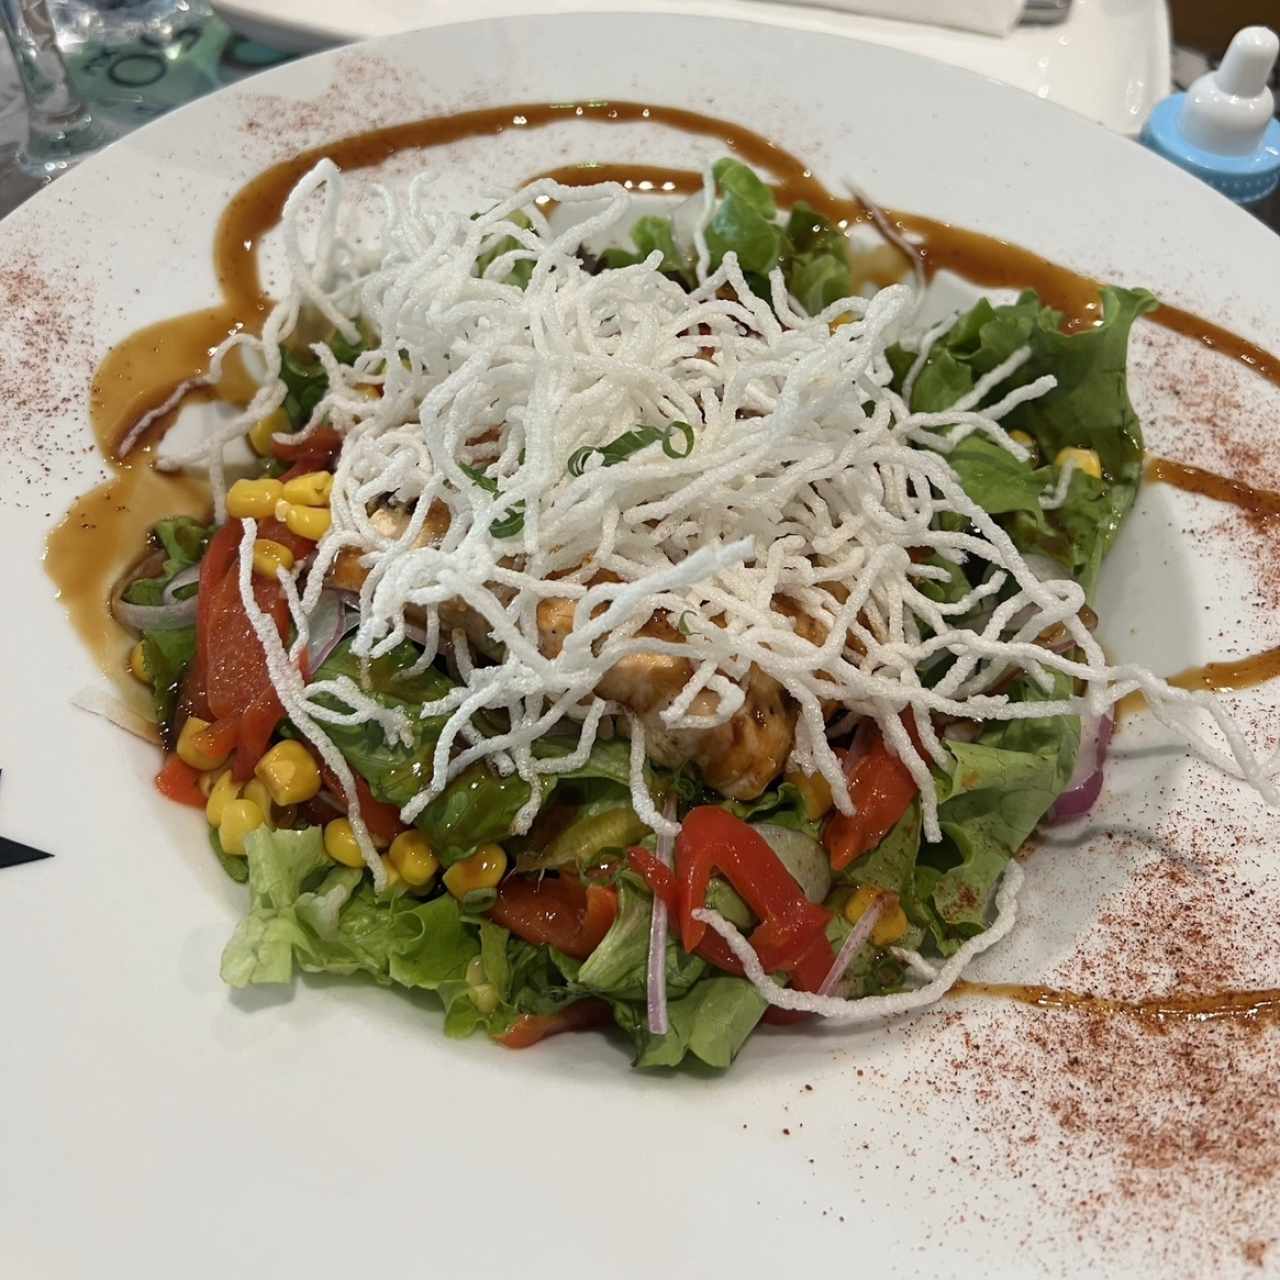 Frescas Ensaladas - Teriyaki Salad